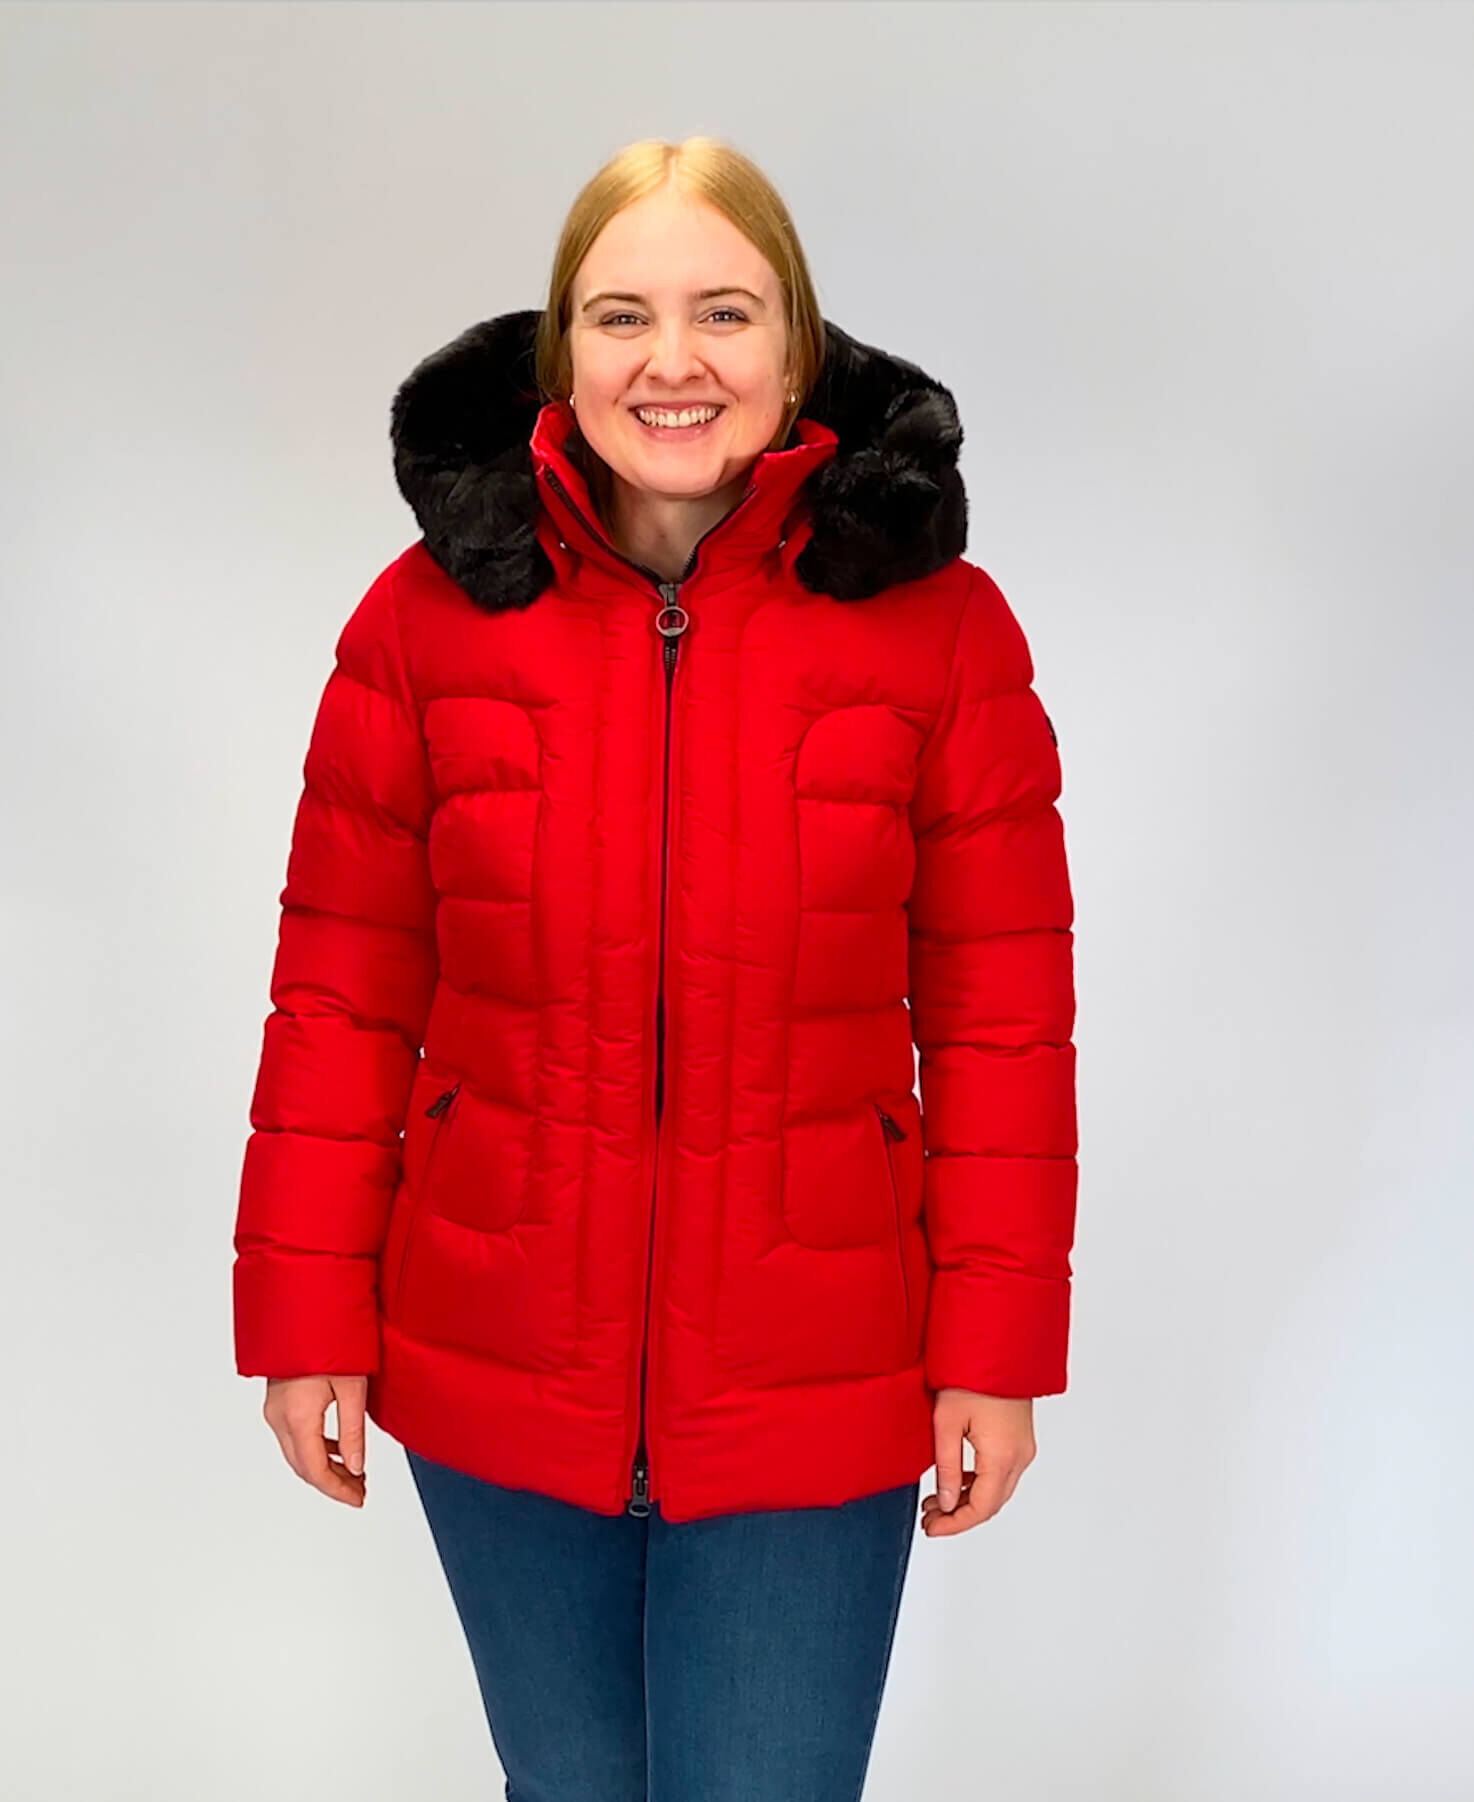 Wellensteyn Belvedere/Belvitesse Medium Damen Jacke red